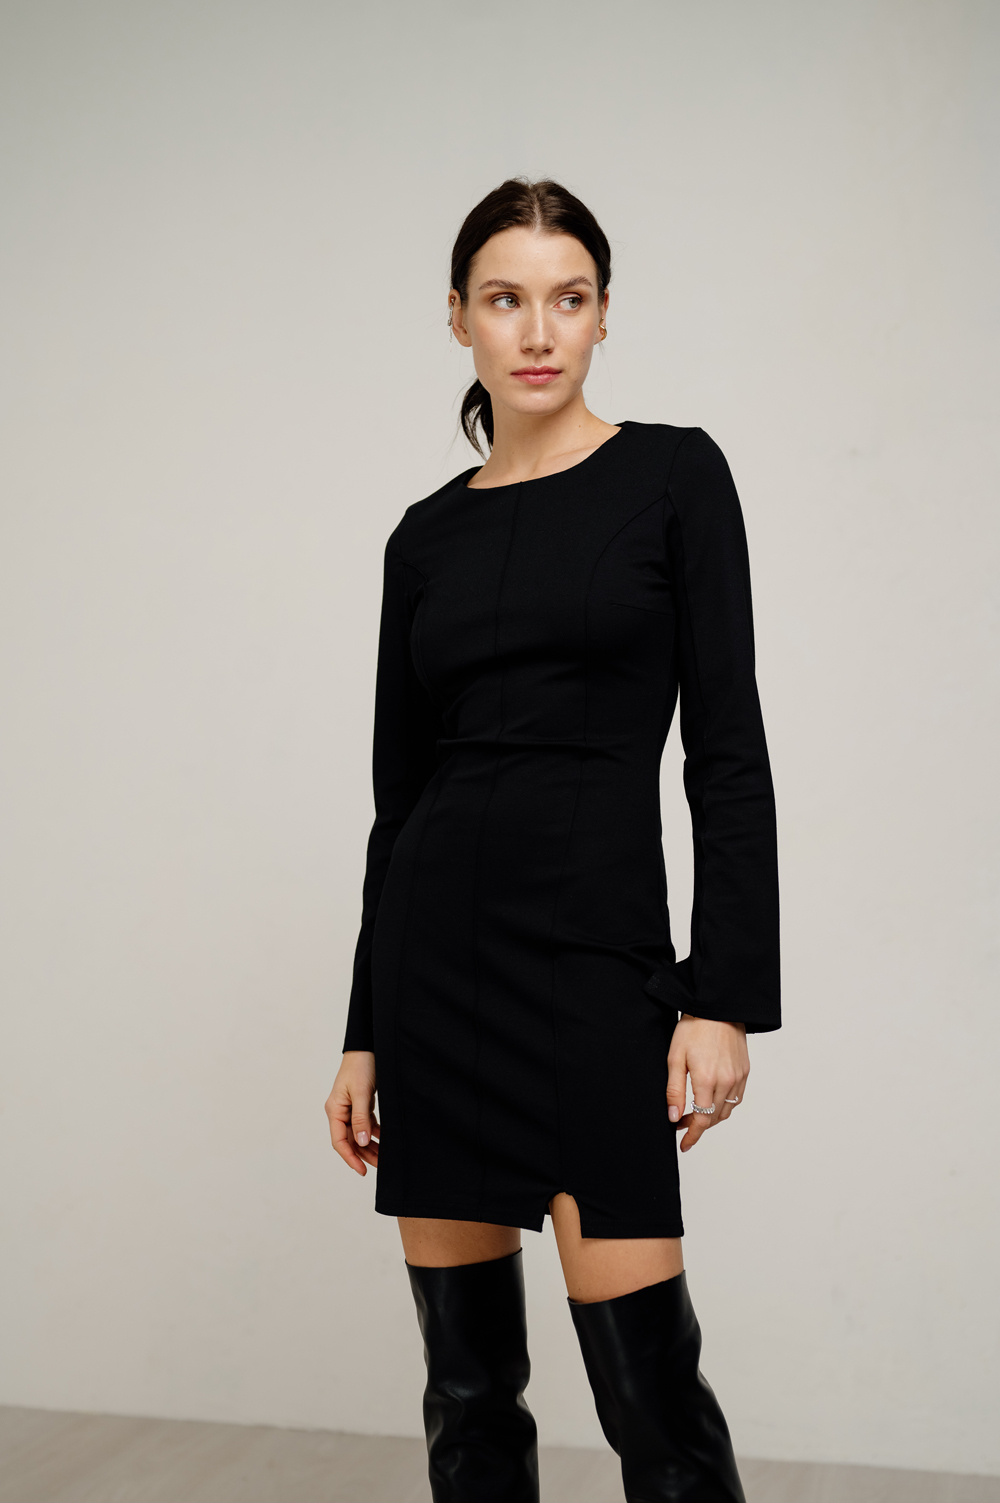 Stylish black mini dress